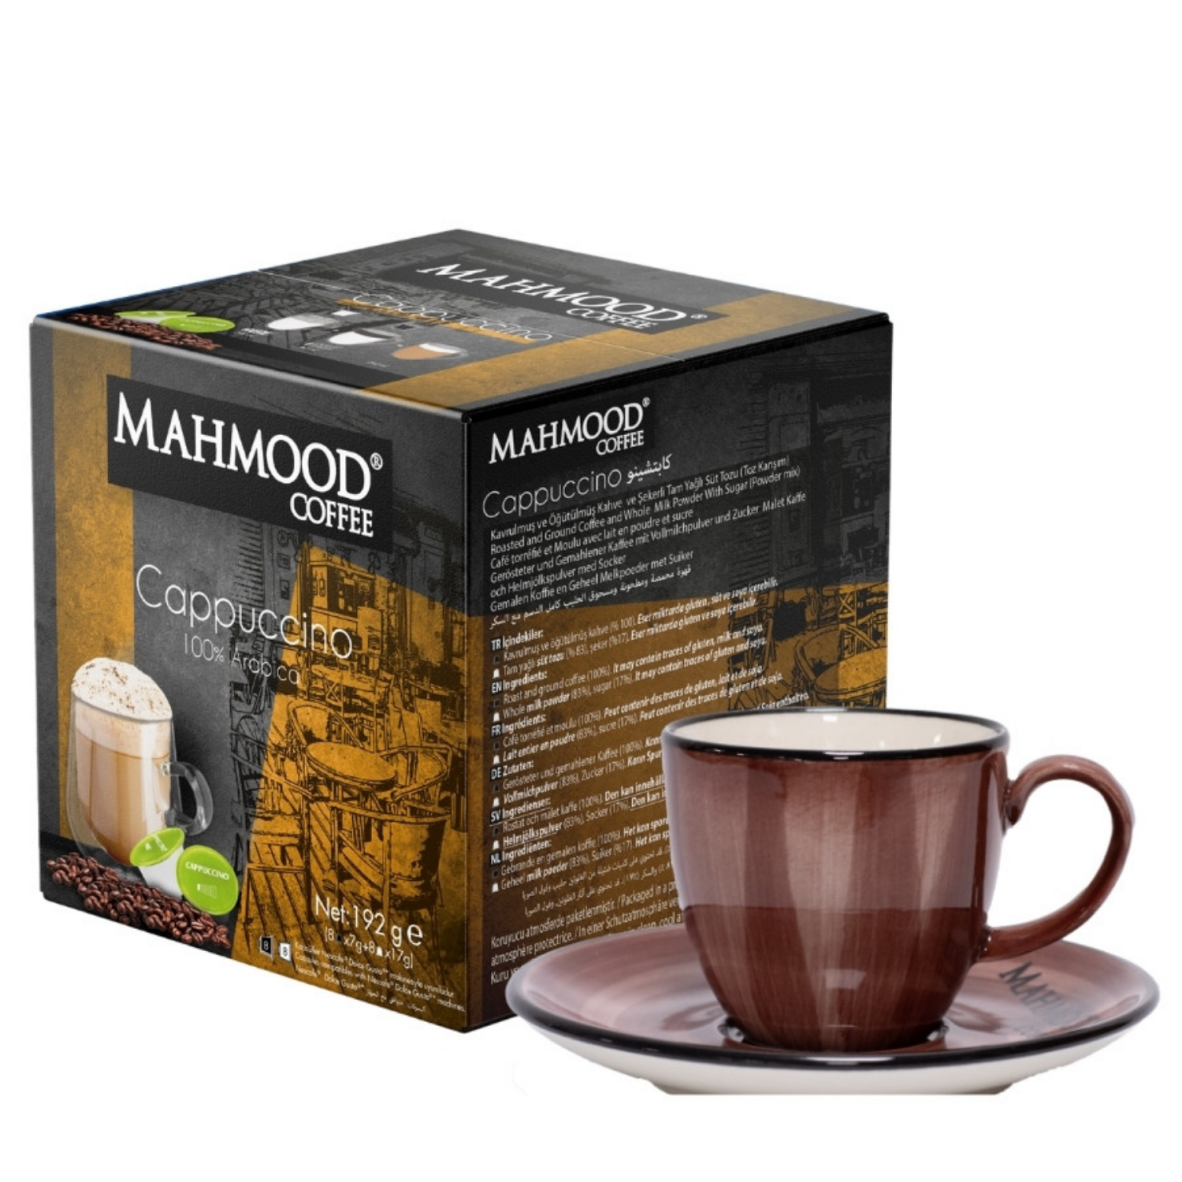 Mahmood Coffee Dolce Gusto Cappuccino Kapsül 24 Gr x 16 Adet ve Fincan - 1